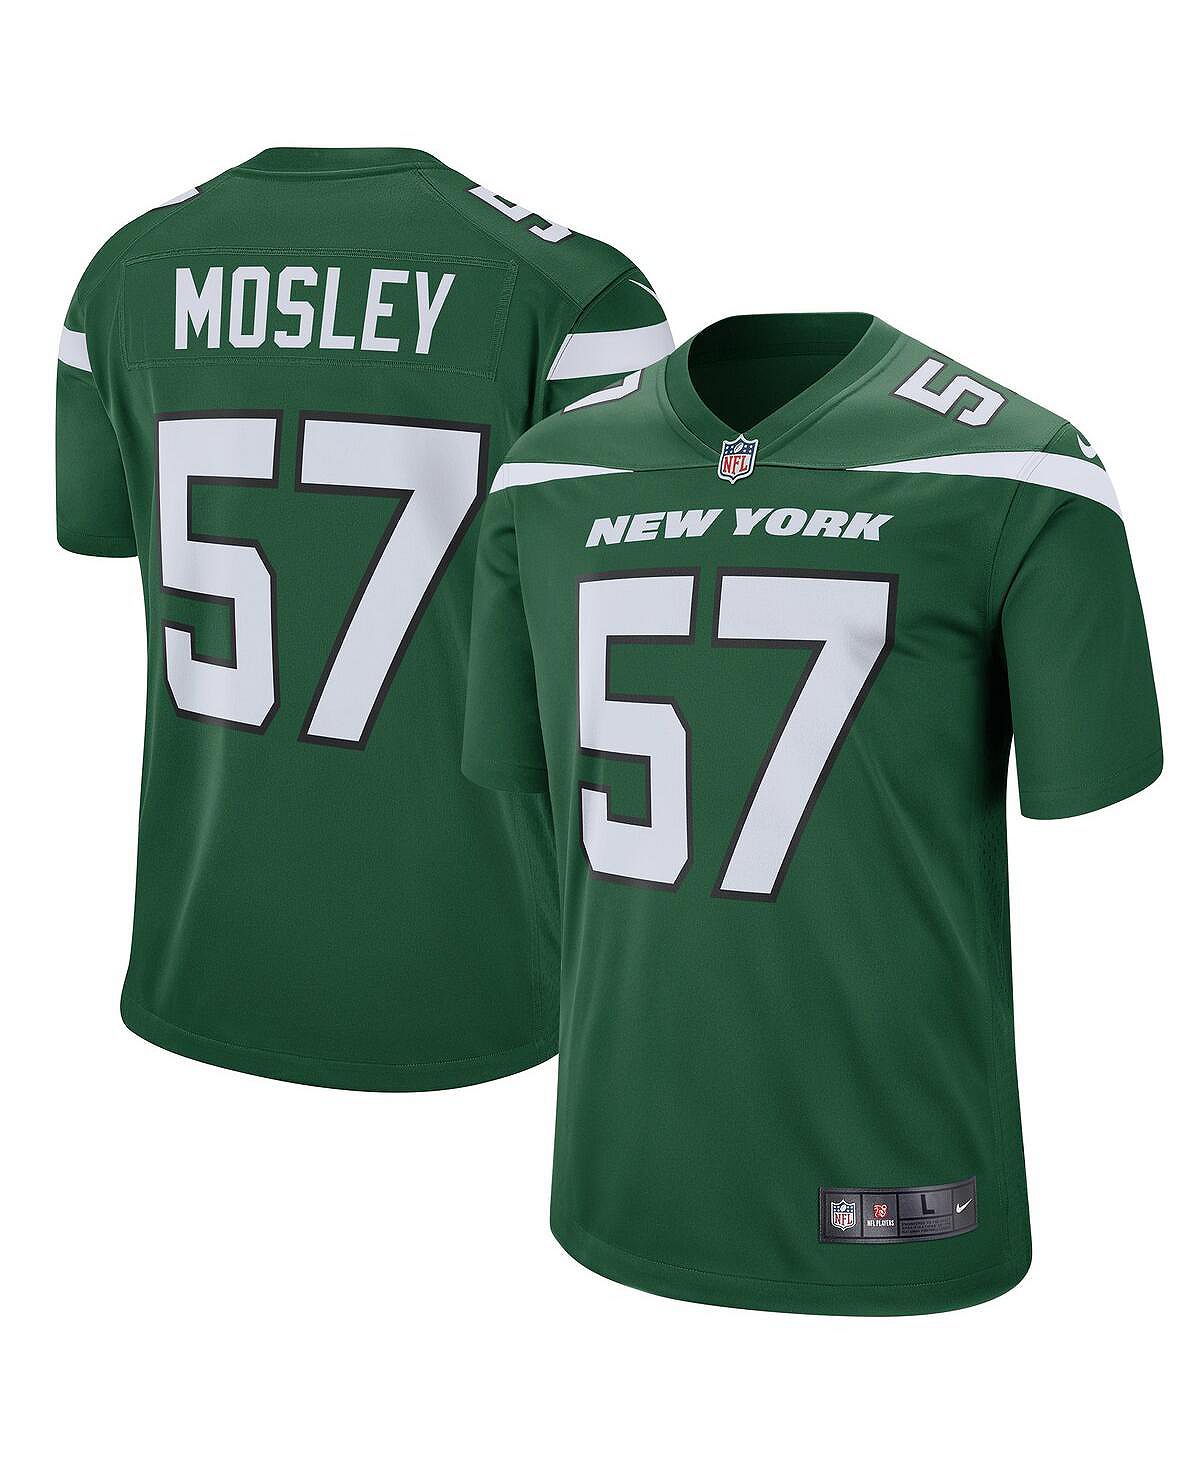 Мужская футболка cj mosley gotham green new york jets game jersey Nike, зеленый конфета jets 42 г